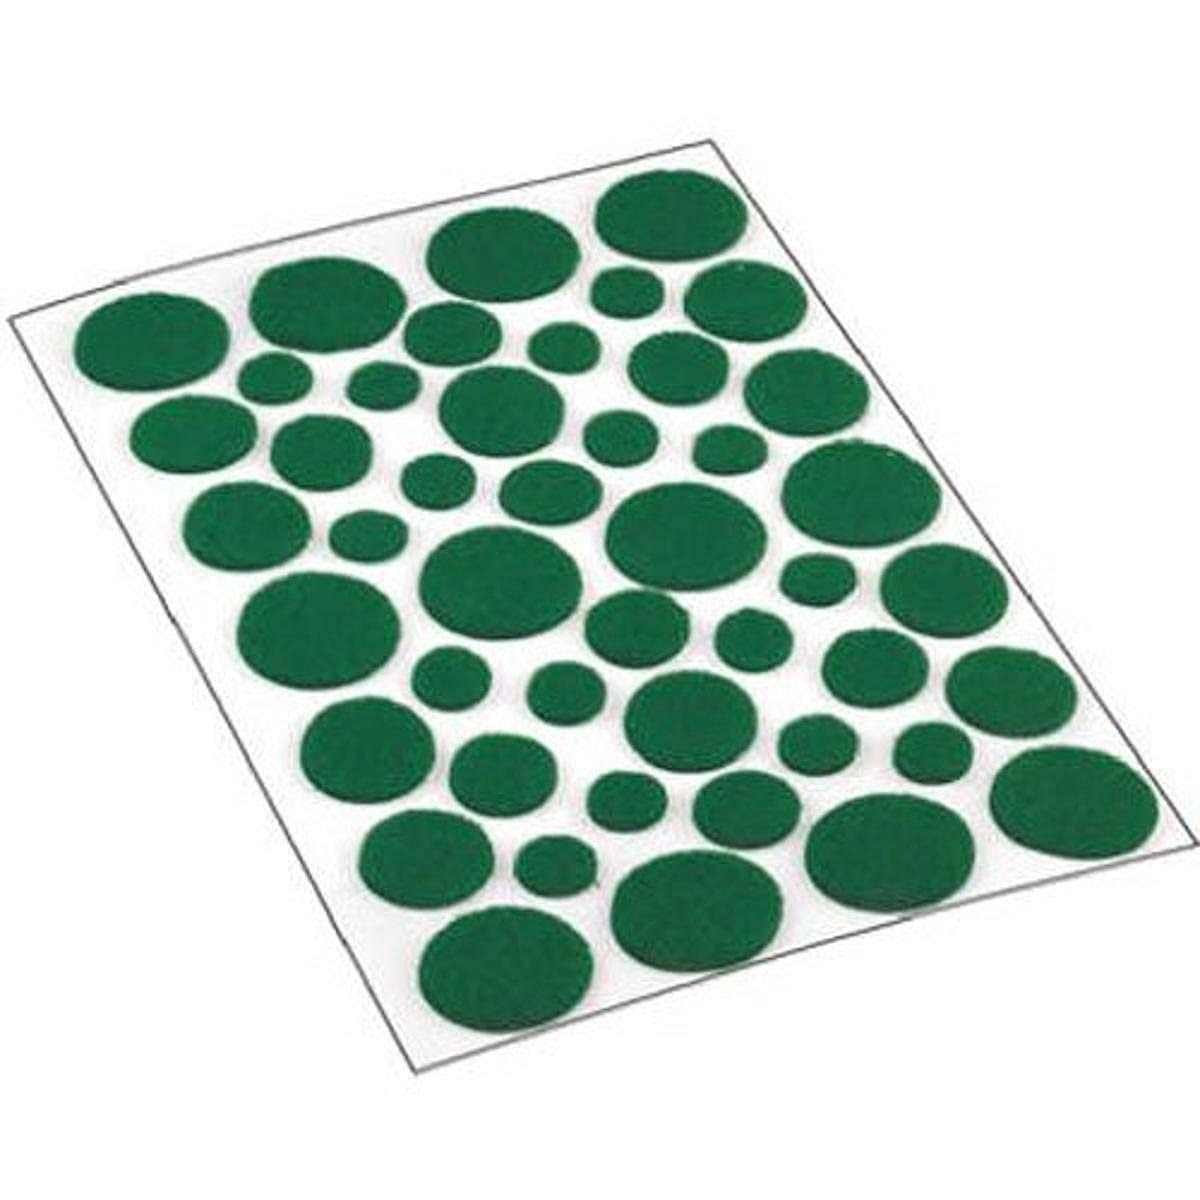 Shepherd Hardware Self-Adhesive Felt Surface Protection Pads - Green, Assorted Sizes, 46pcs